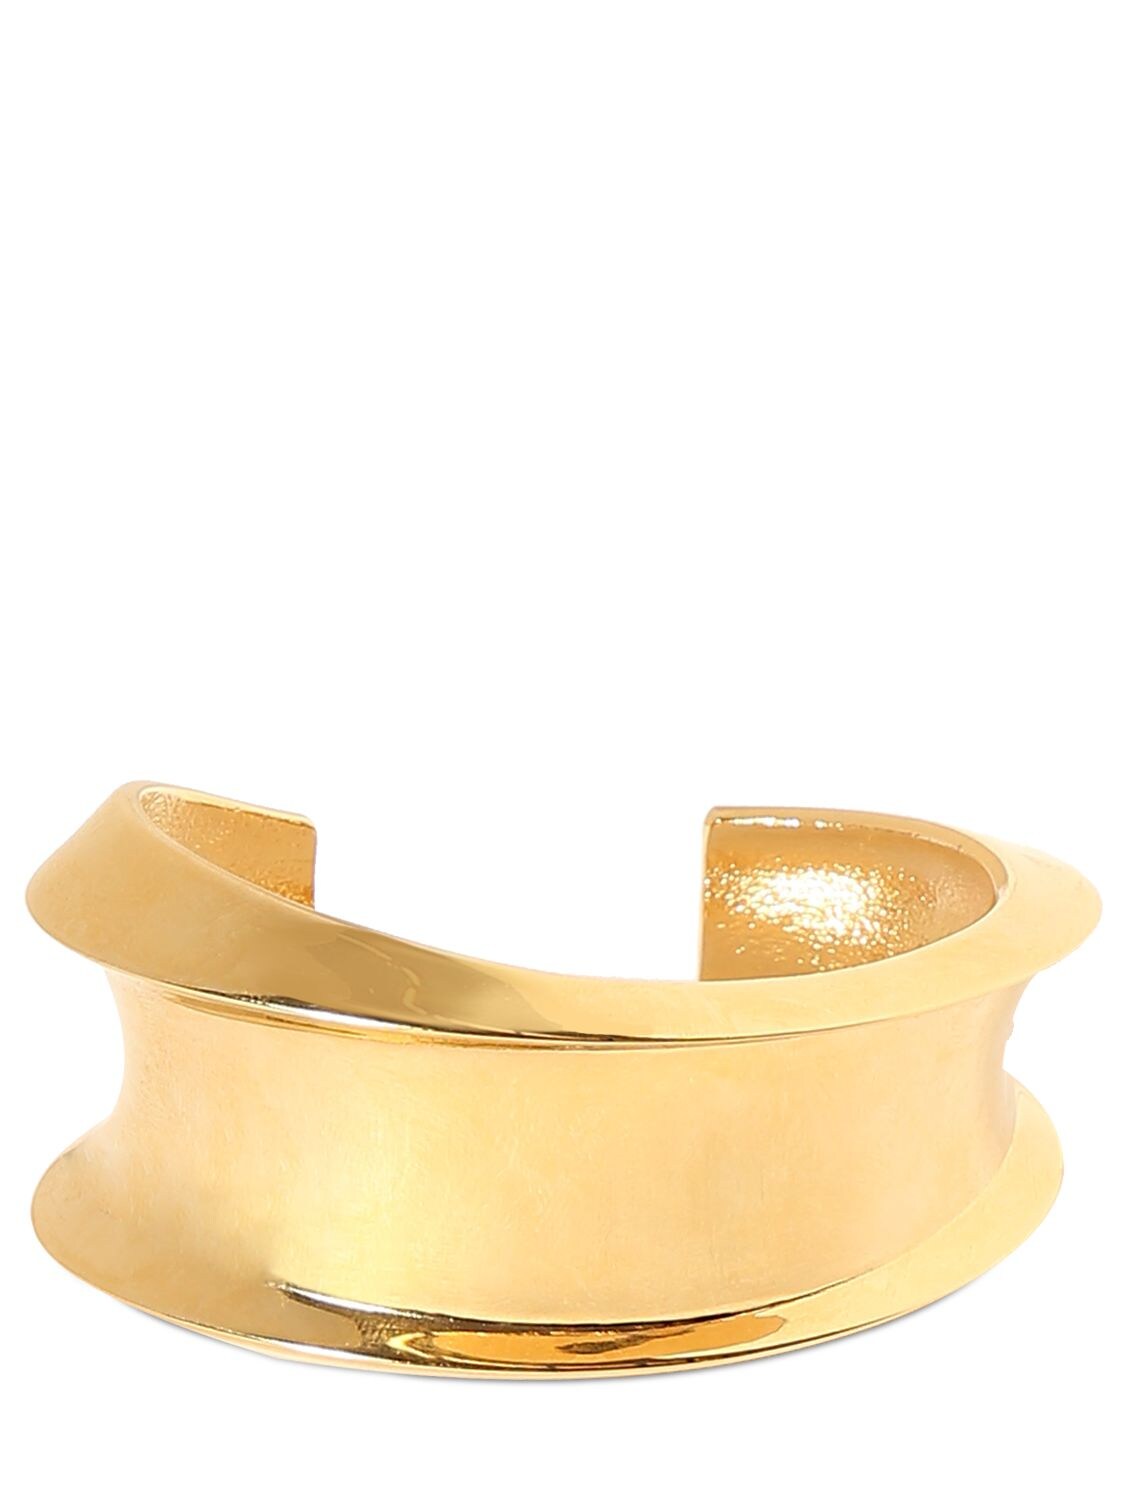 Image of Brass Cuff Bracelet